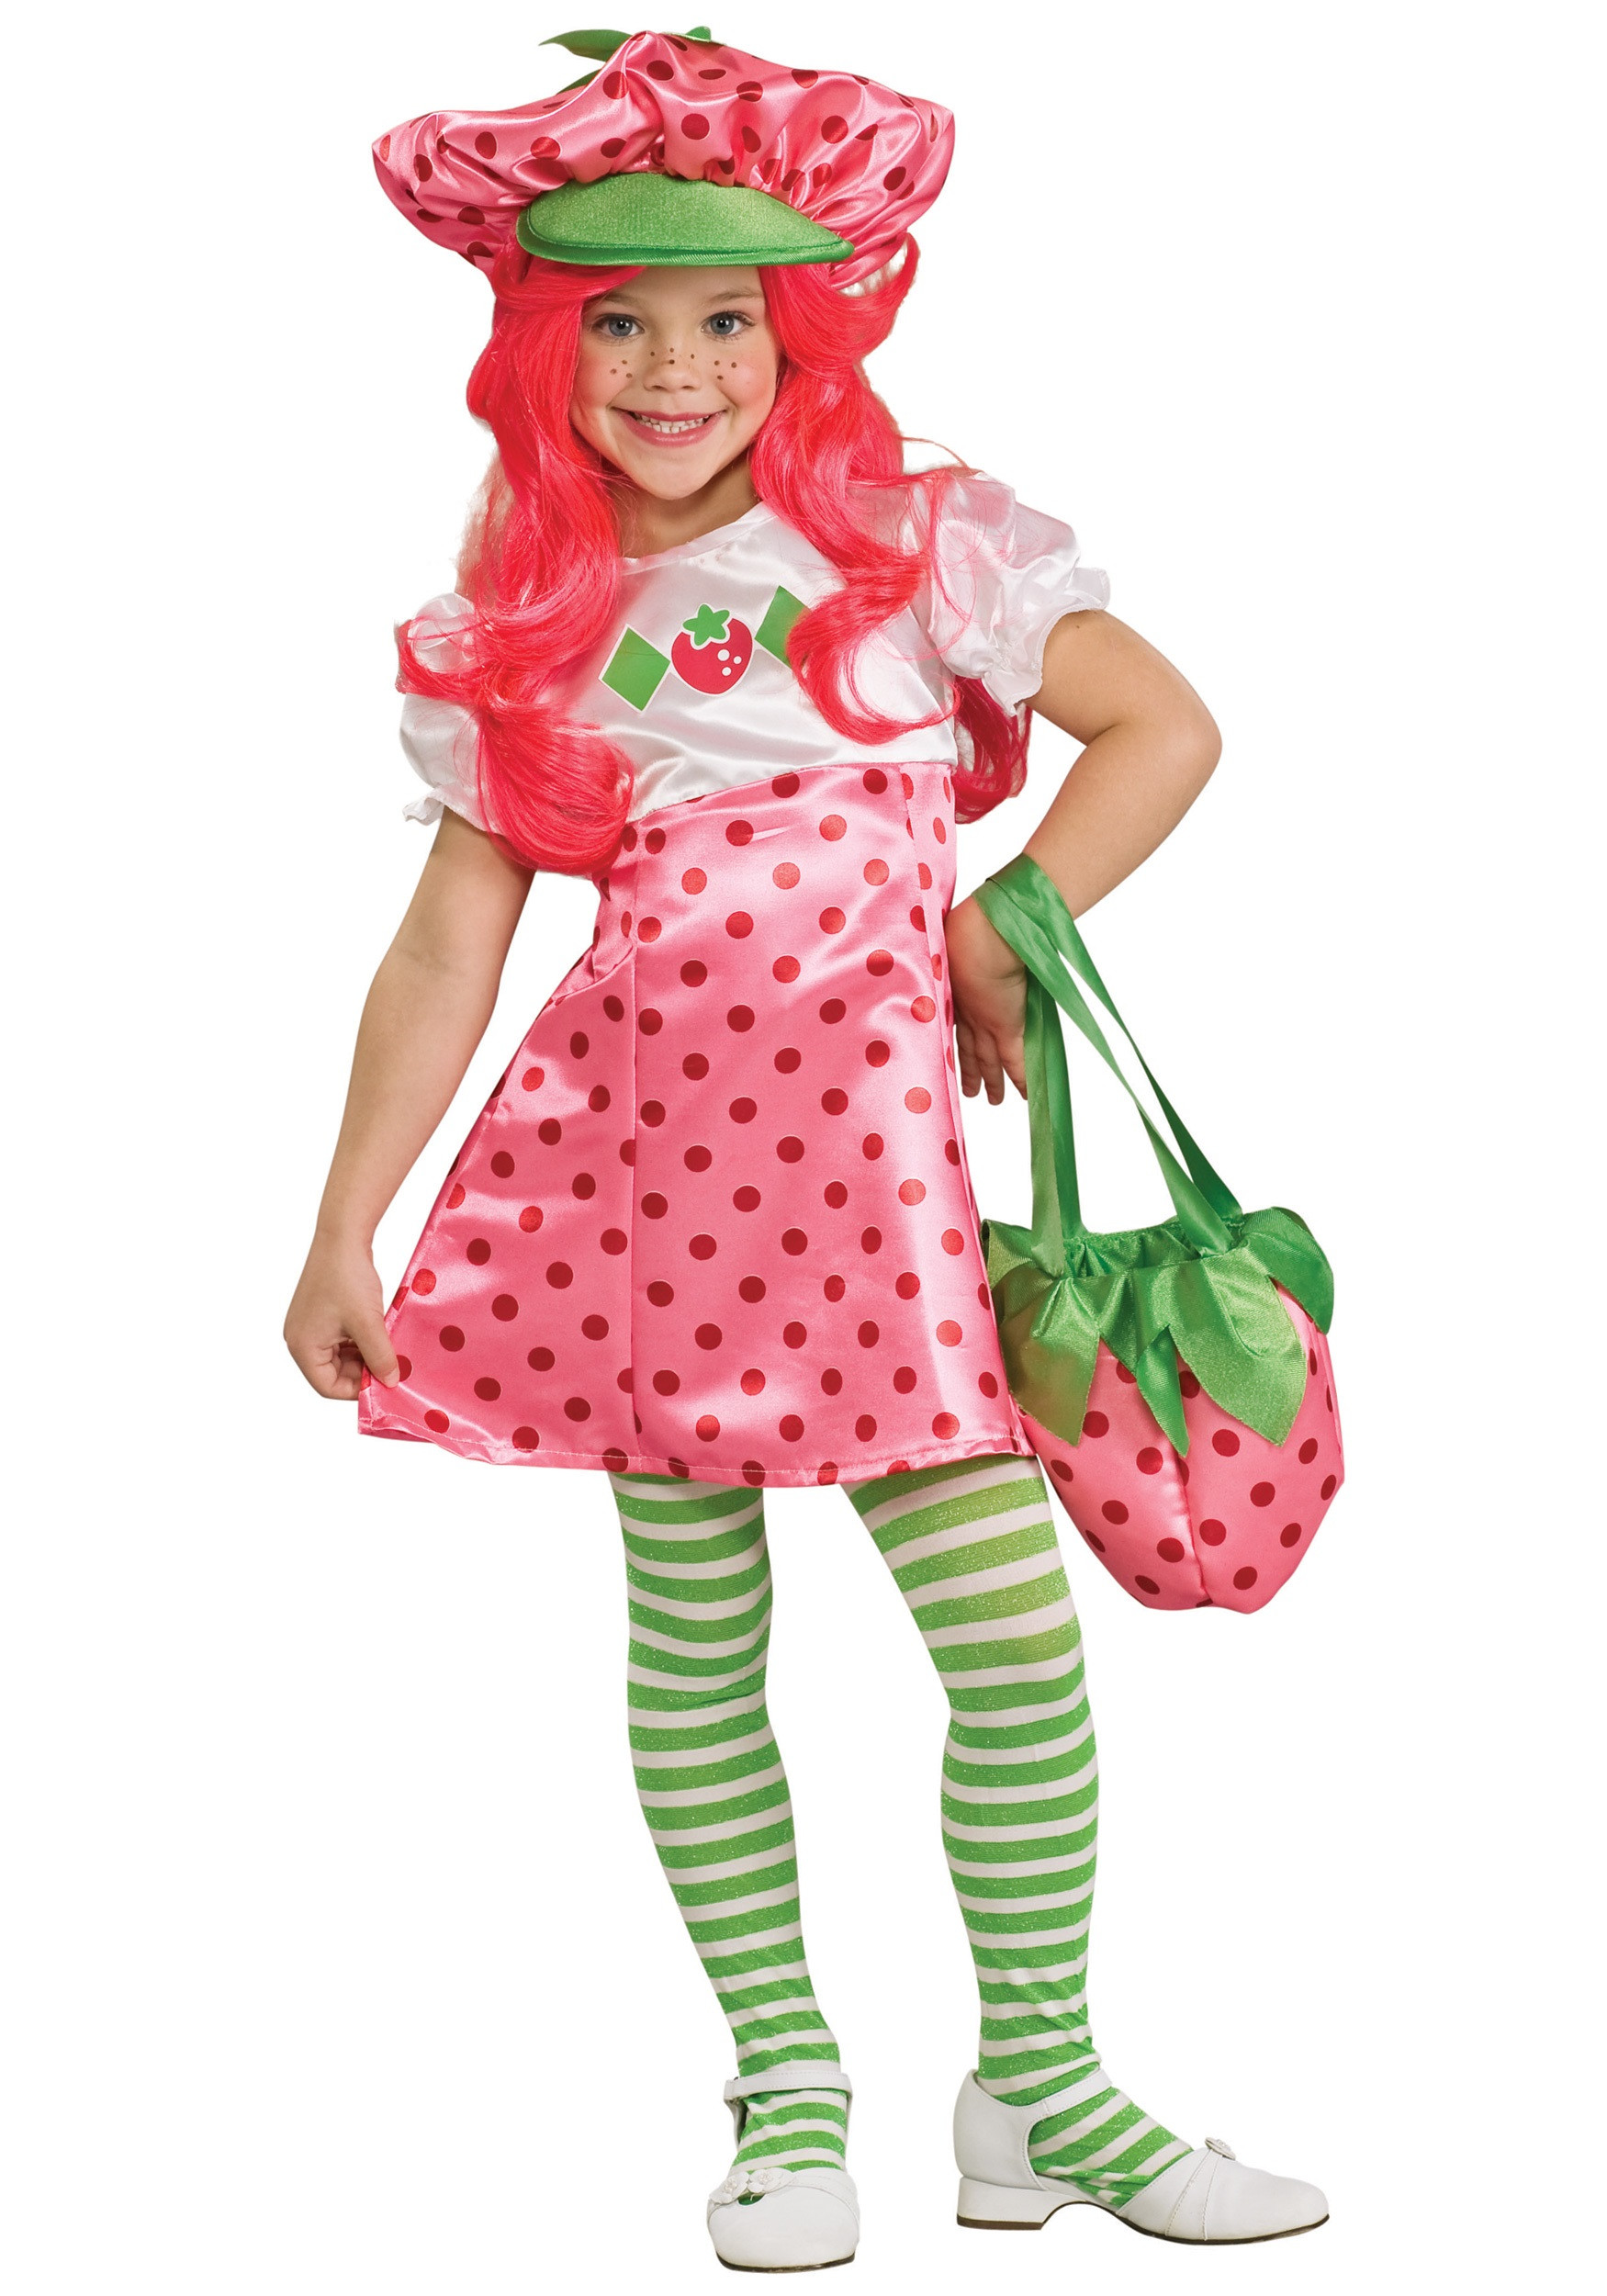 Strawberry Shortcake Halloween Costumes
 Child Strawberry Shortcake Costume